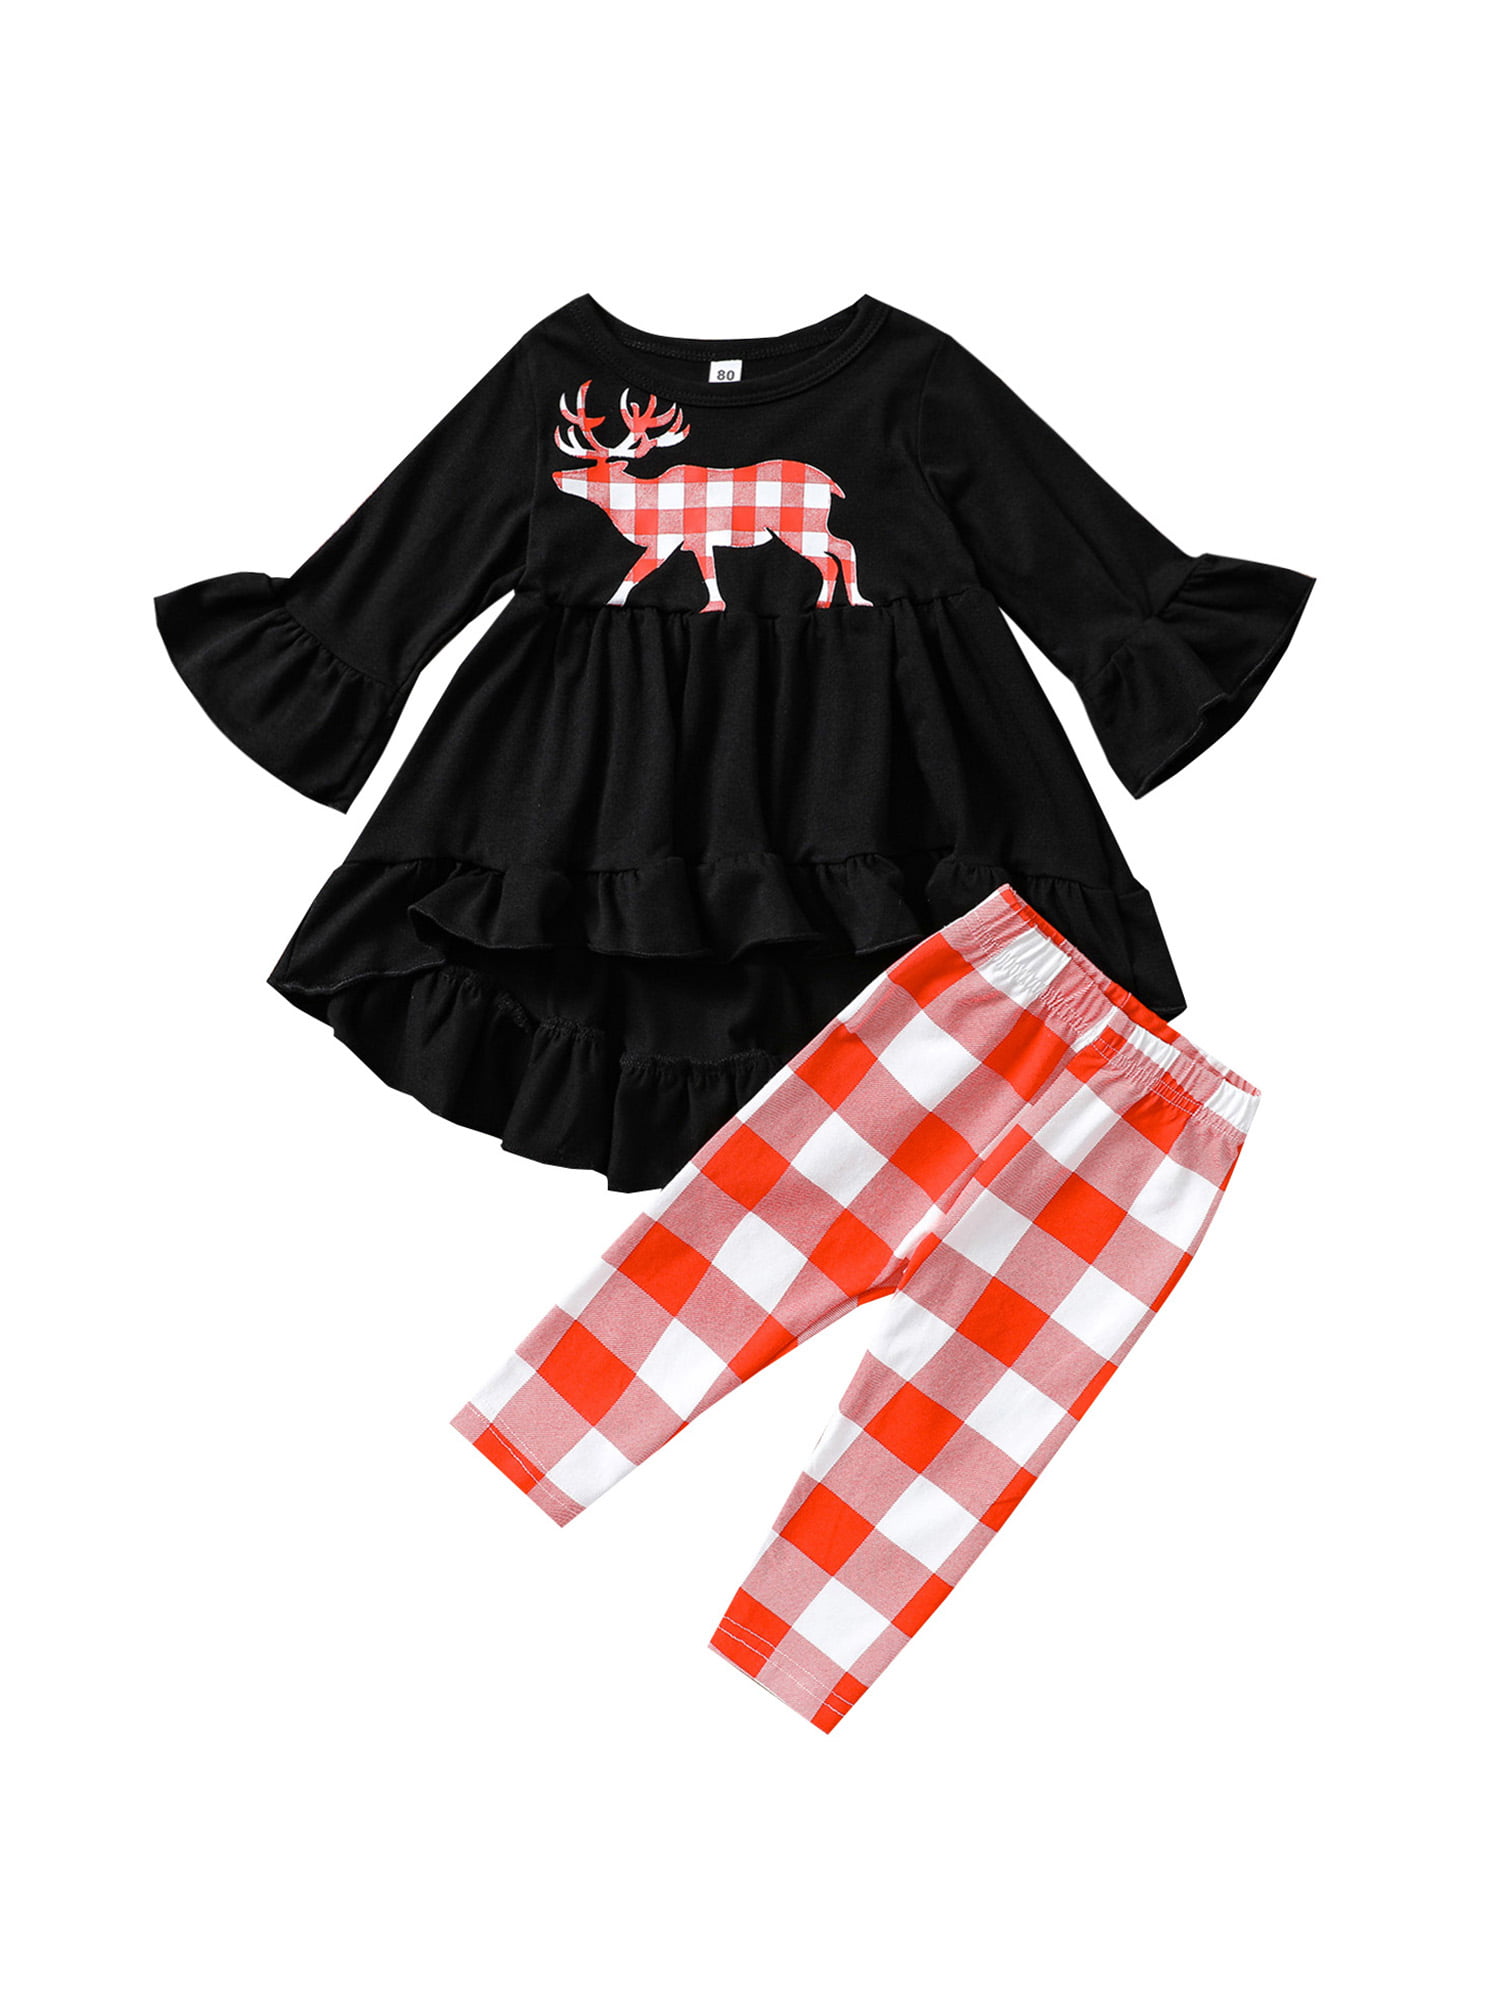 Infant Baby Girls Christmas Outfits Elk T-shirt Tops+Pants Xmas Clothes Set 2PCS 